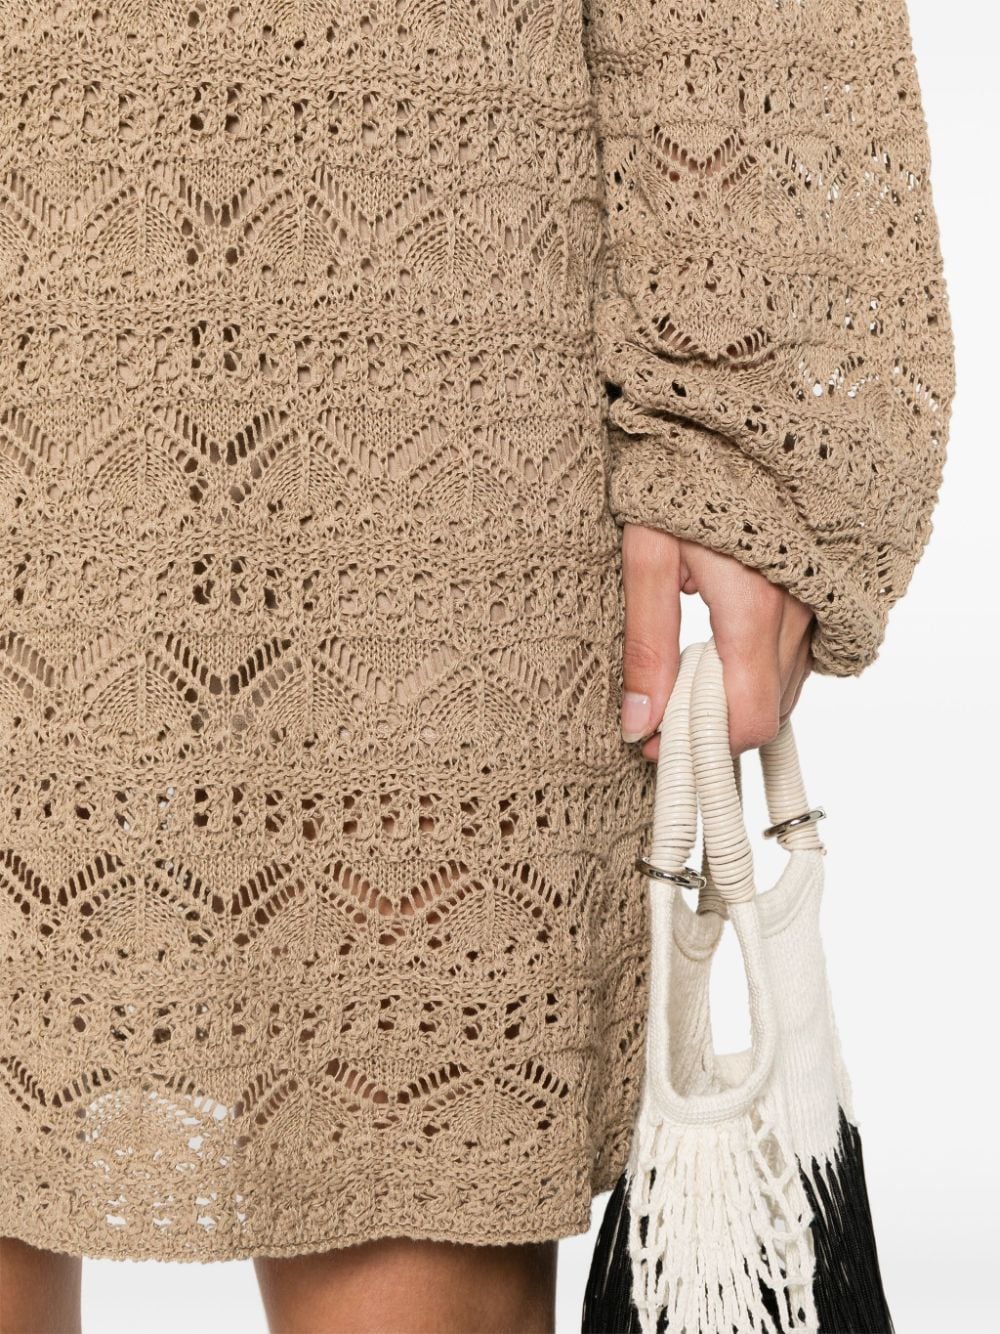 Iro IRO- Crochet Cotton Short Dress